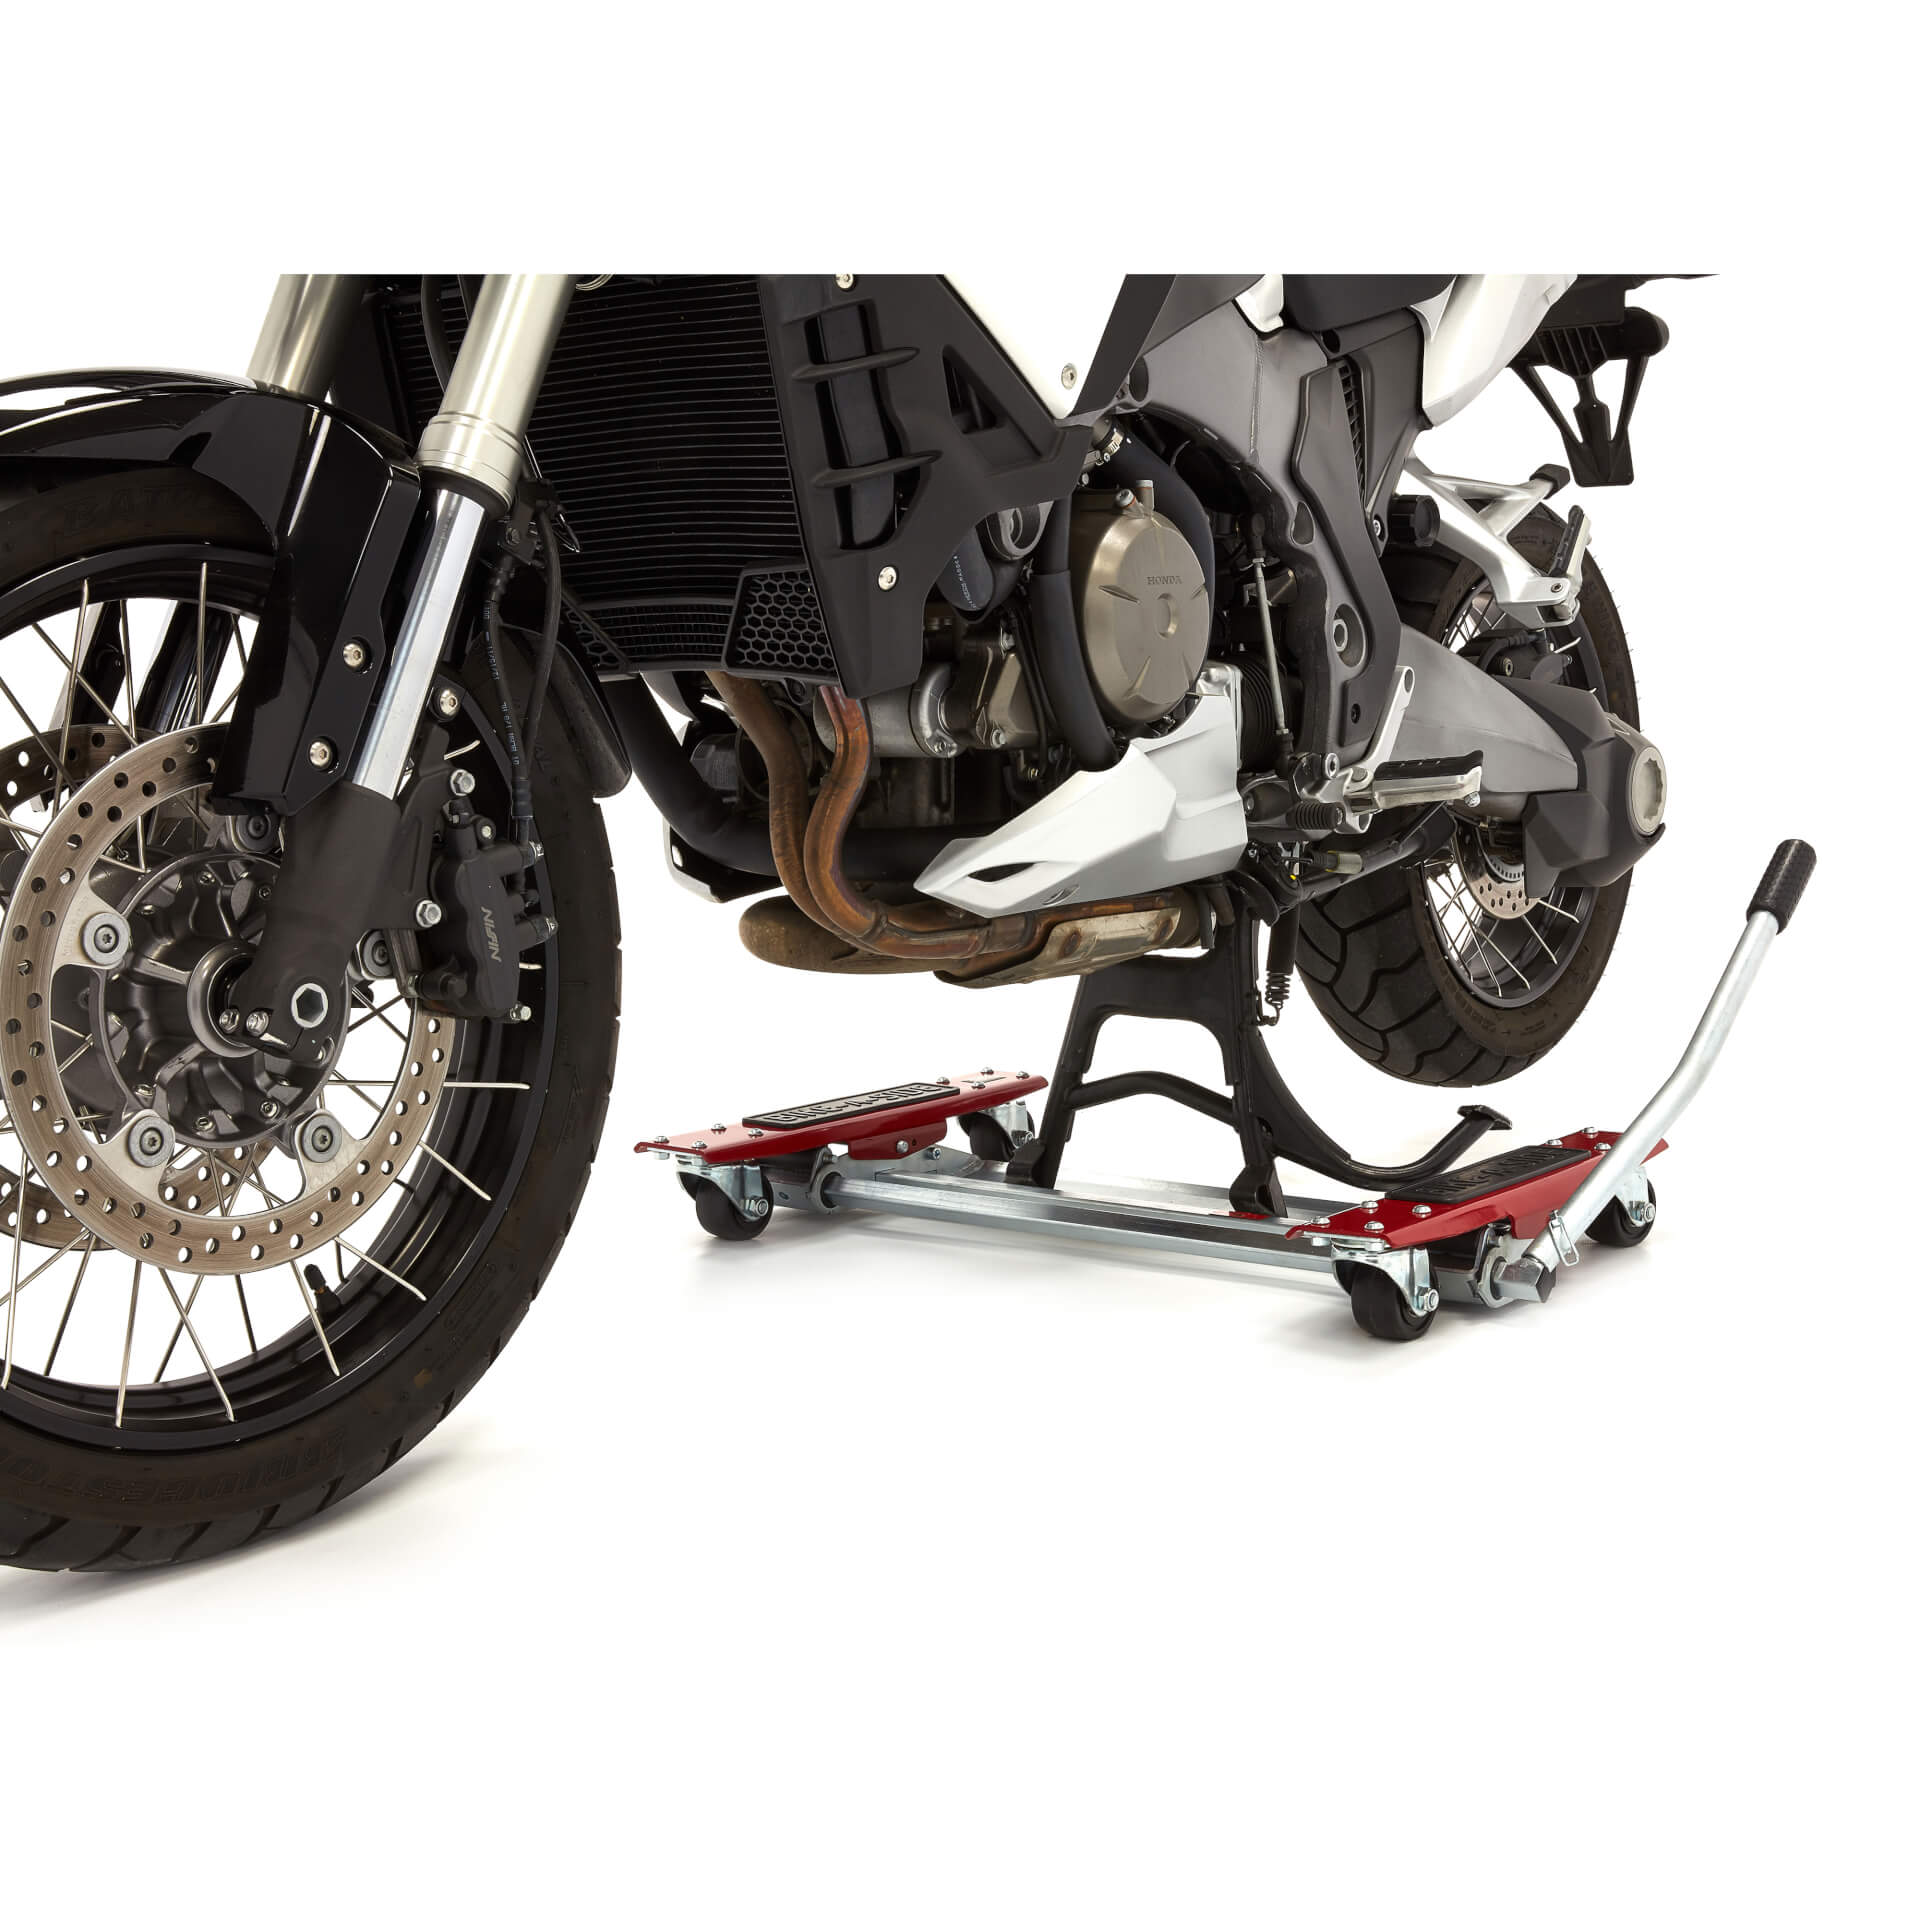 acebikes Rangierhilfe Bike-A-Side Moto Mover